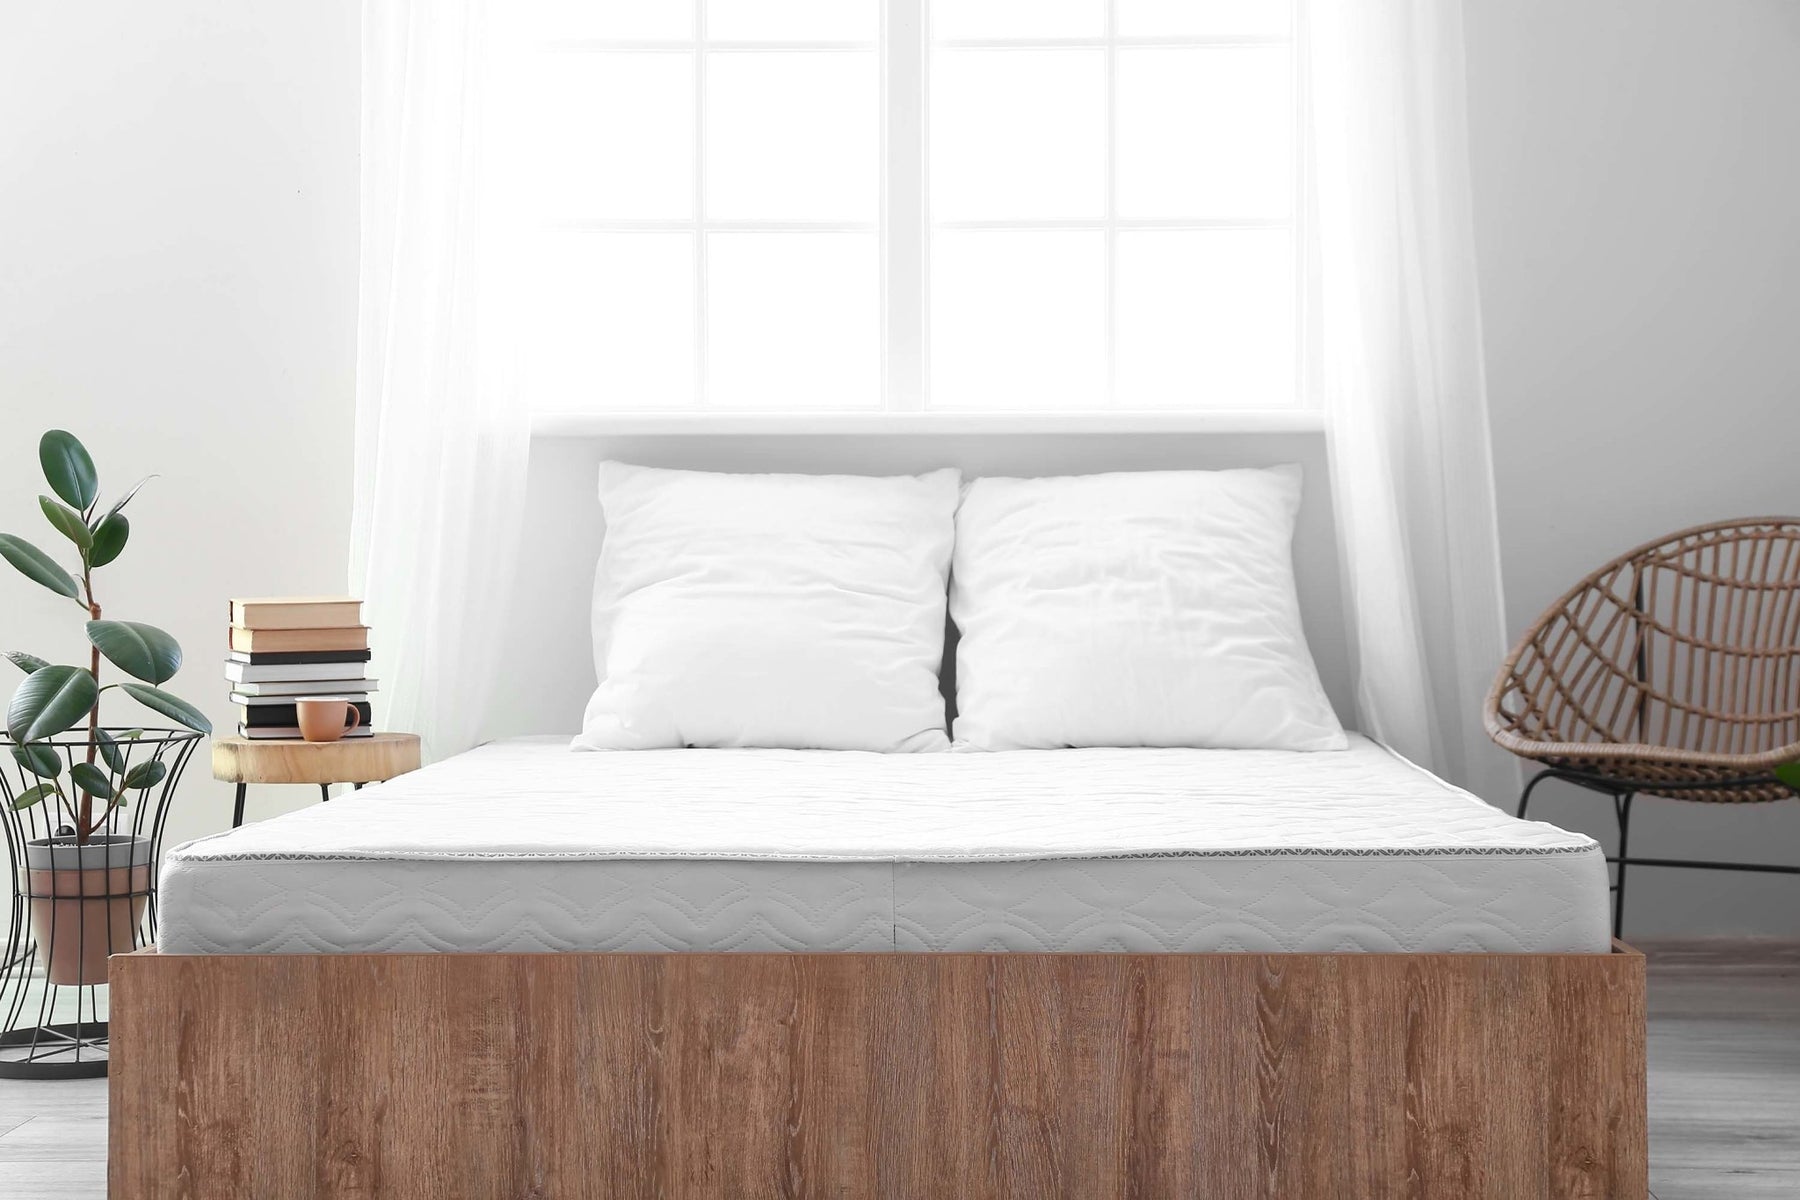 How can I make my sofa bed mattress comfortable?